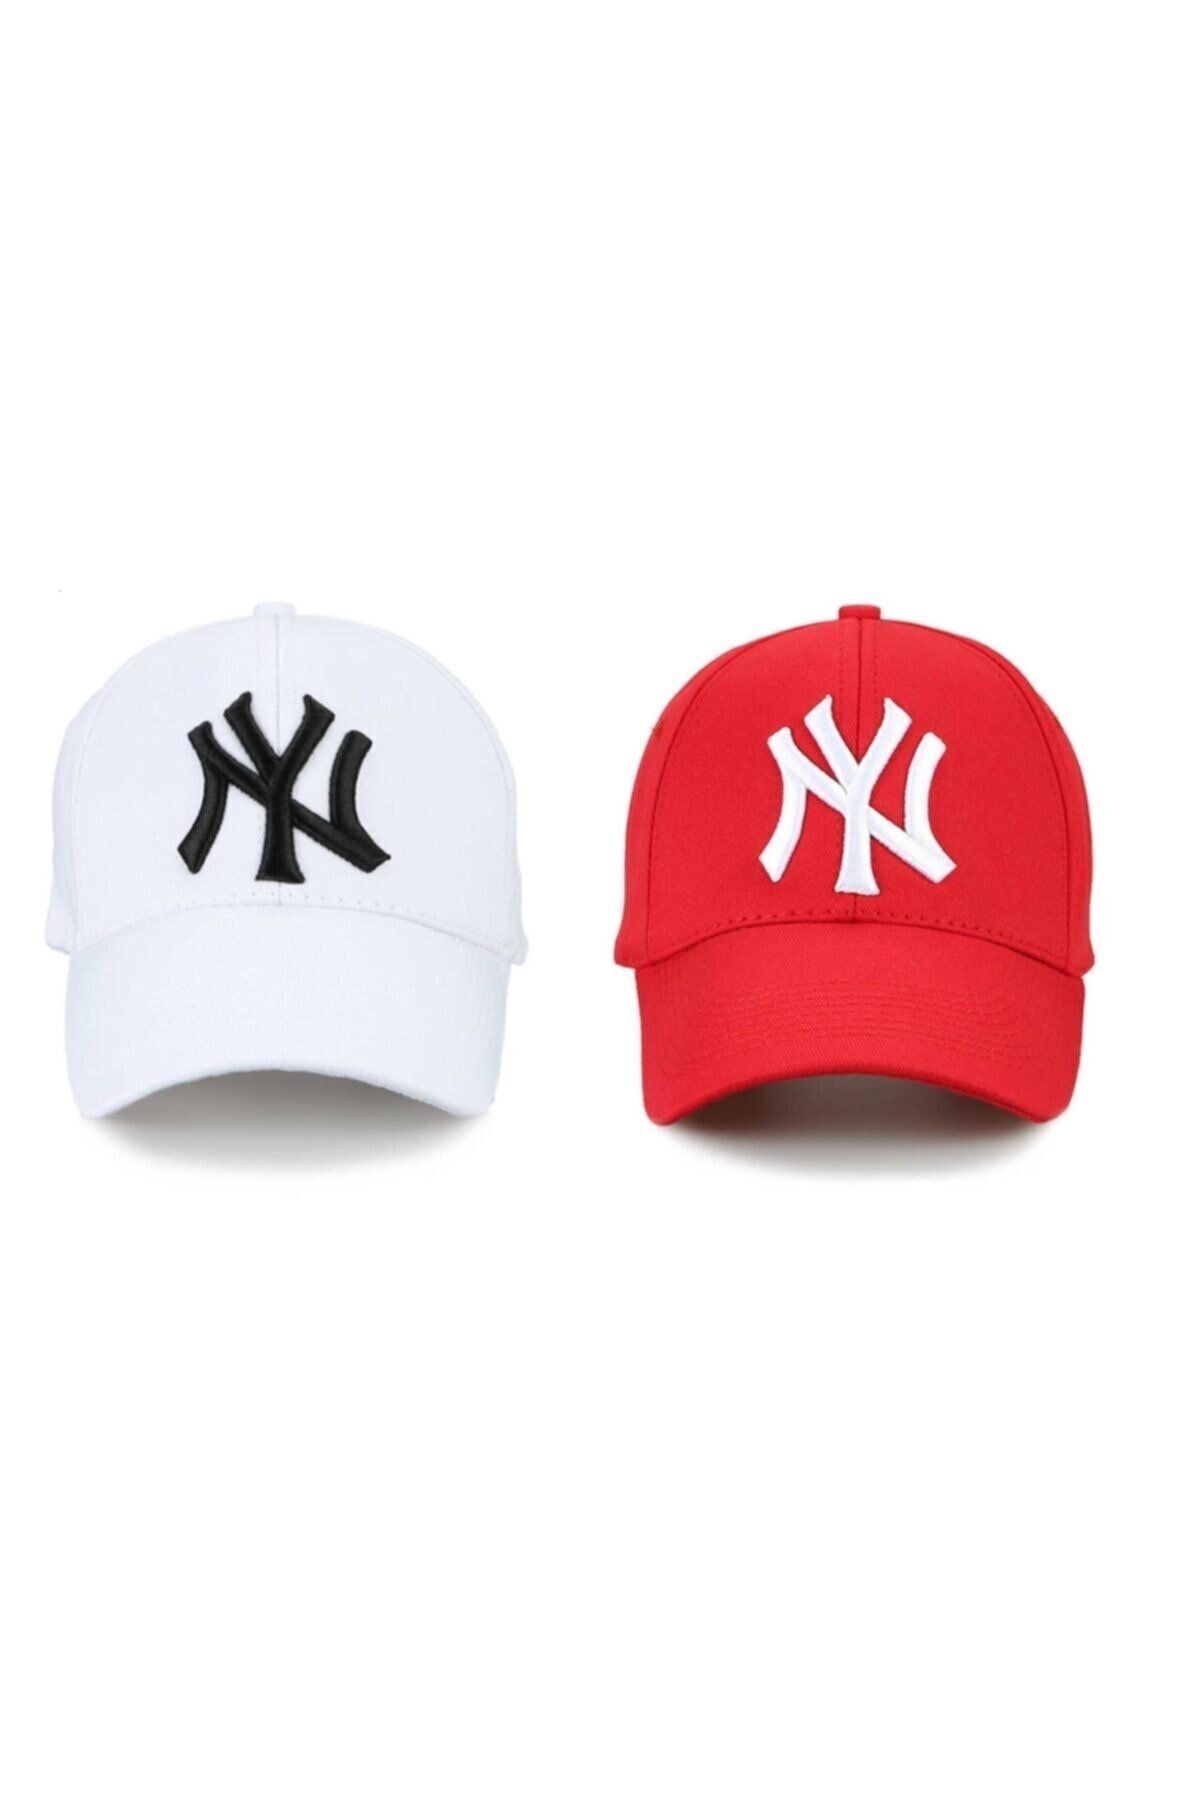 QUATEX Ny New York 2'li Unisex Set Şapka